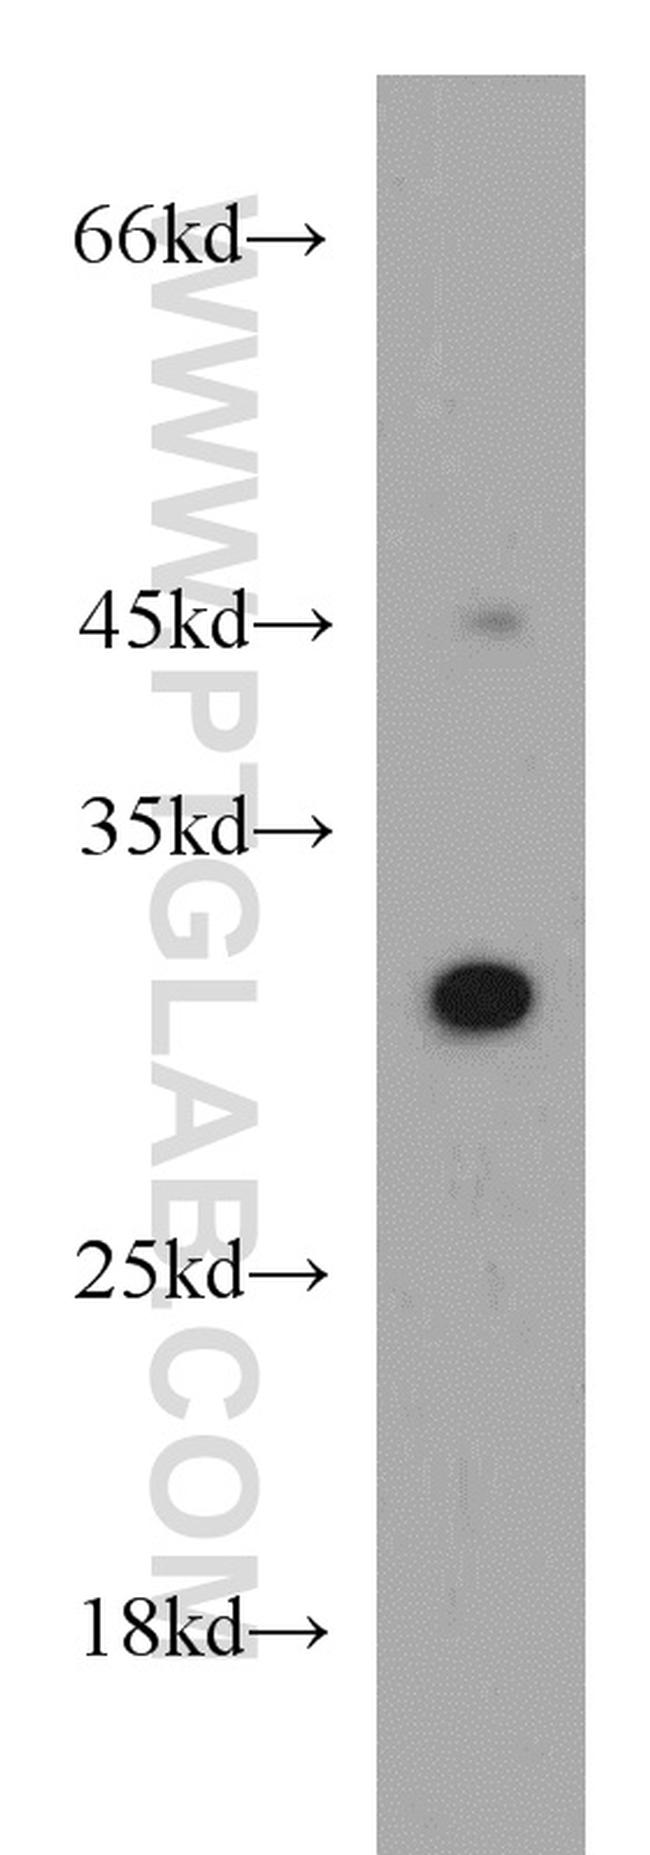 VDAC1/2 Antibody in Western Blot (WB)